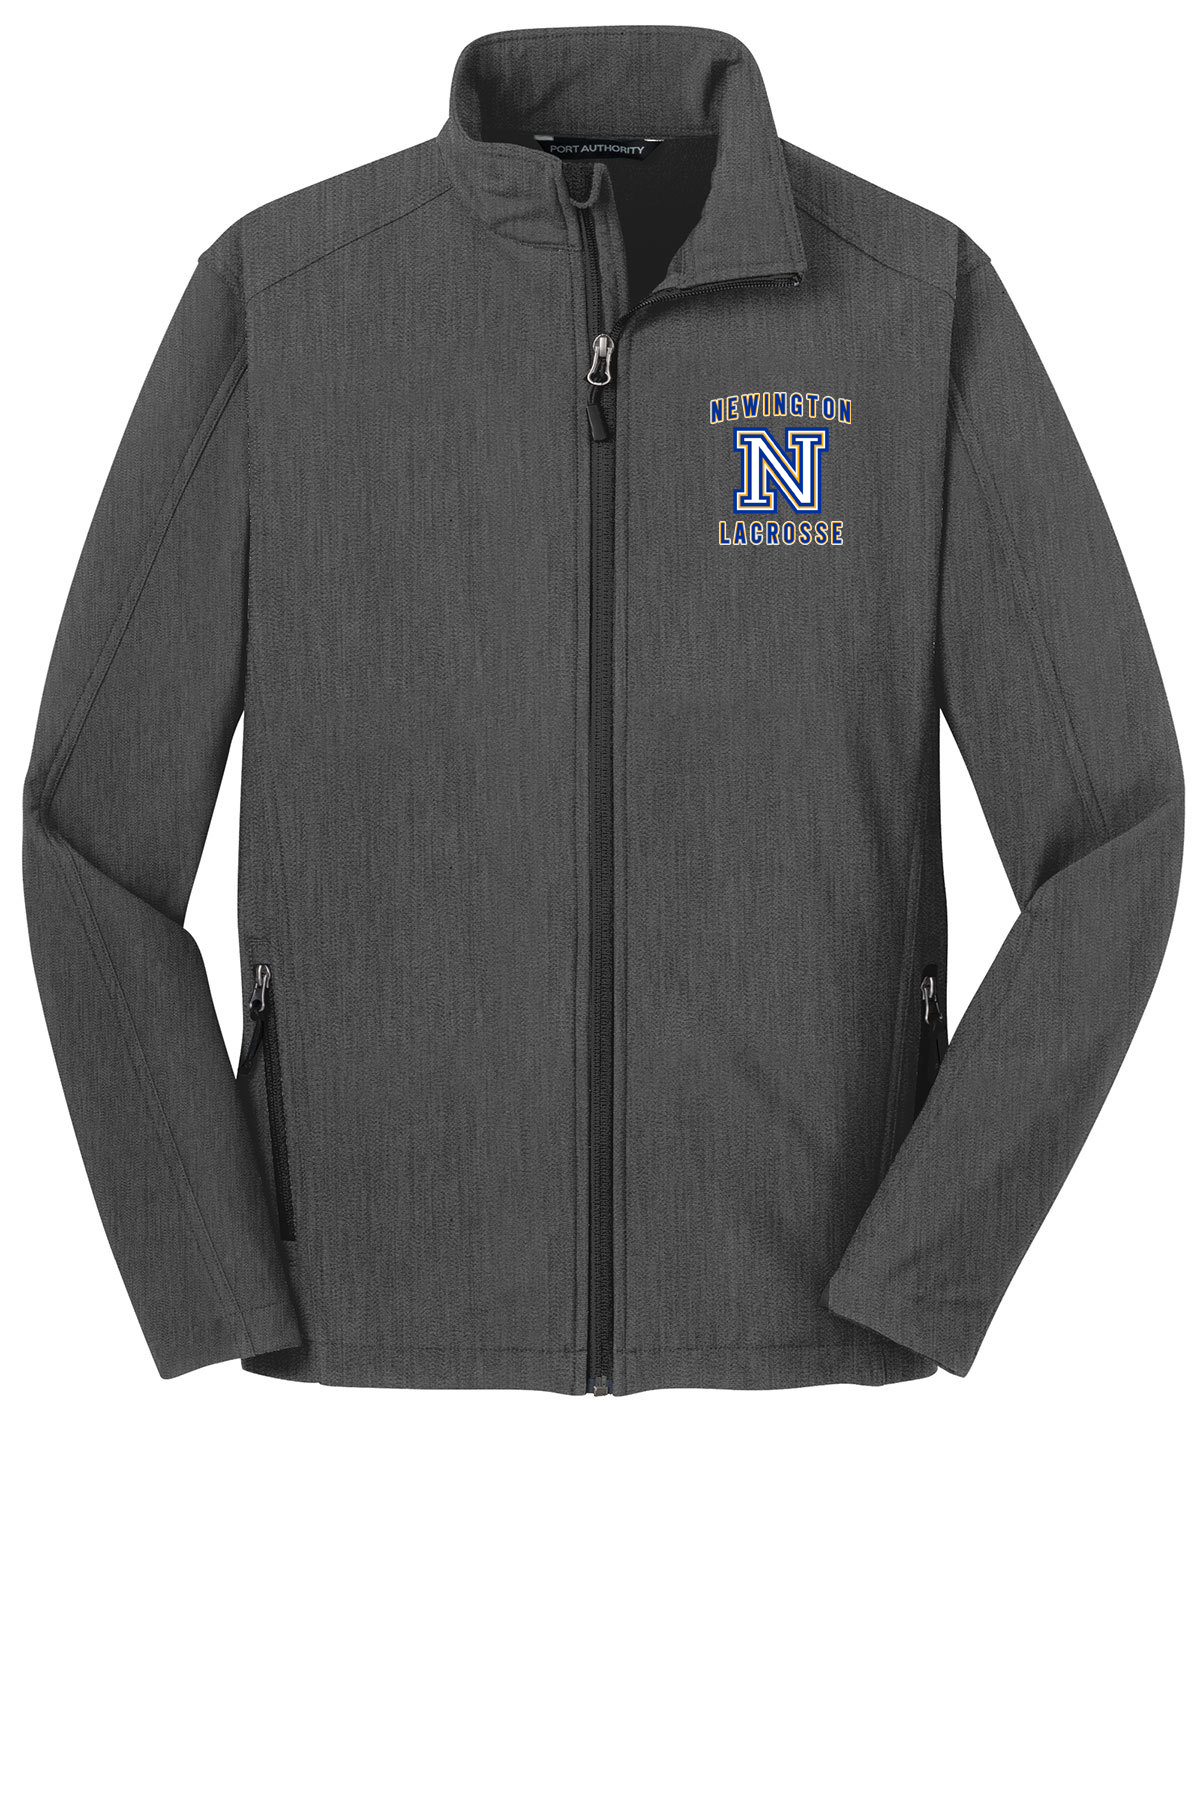 Newington Lacrosse Charcoal Soft Shell Jacket